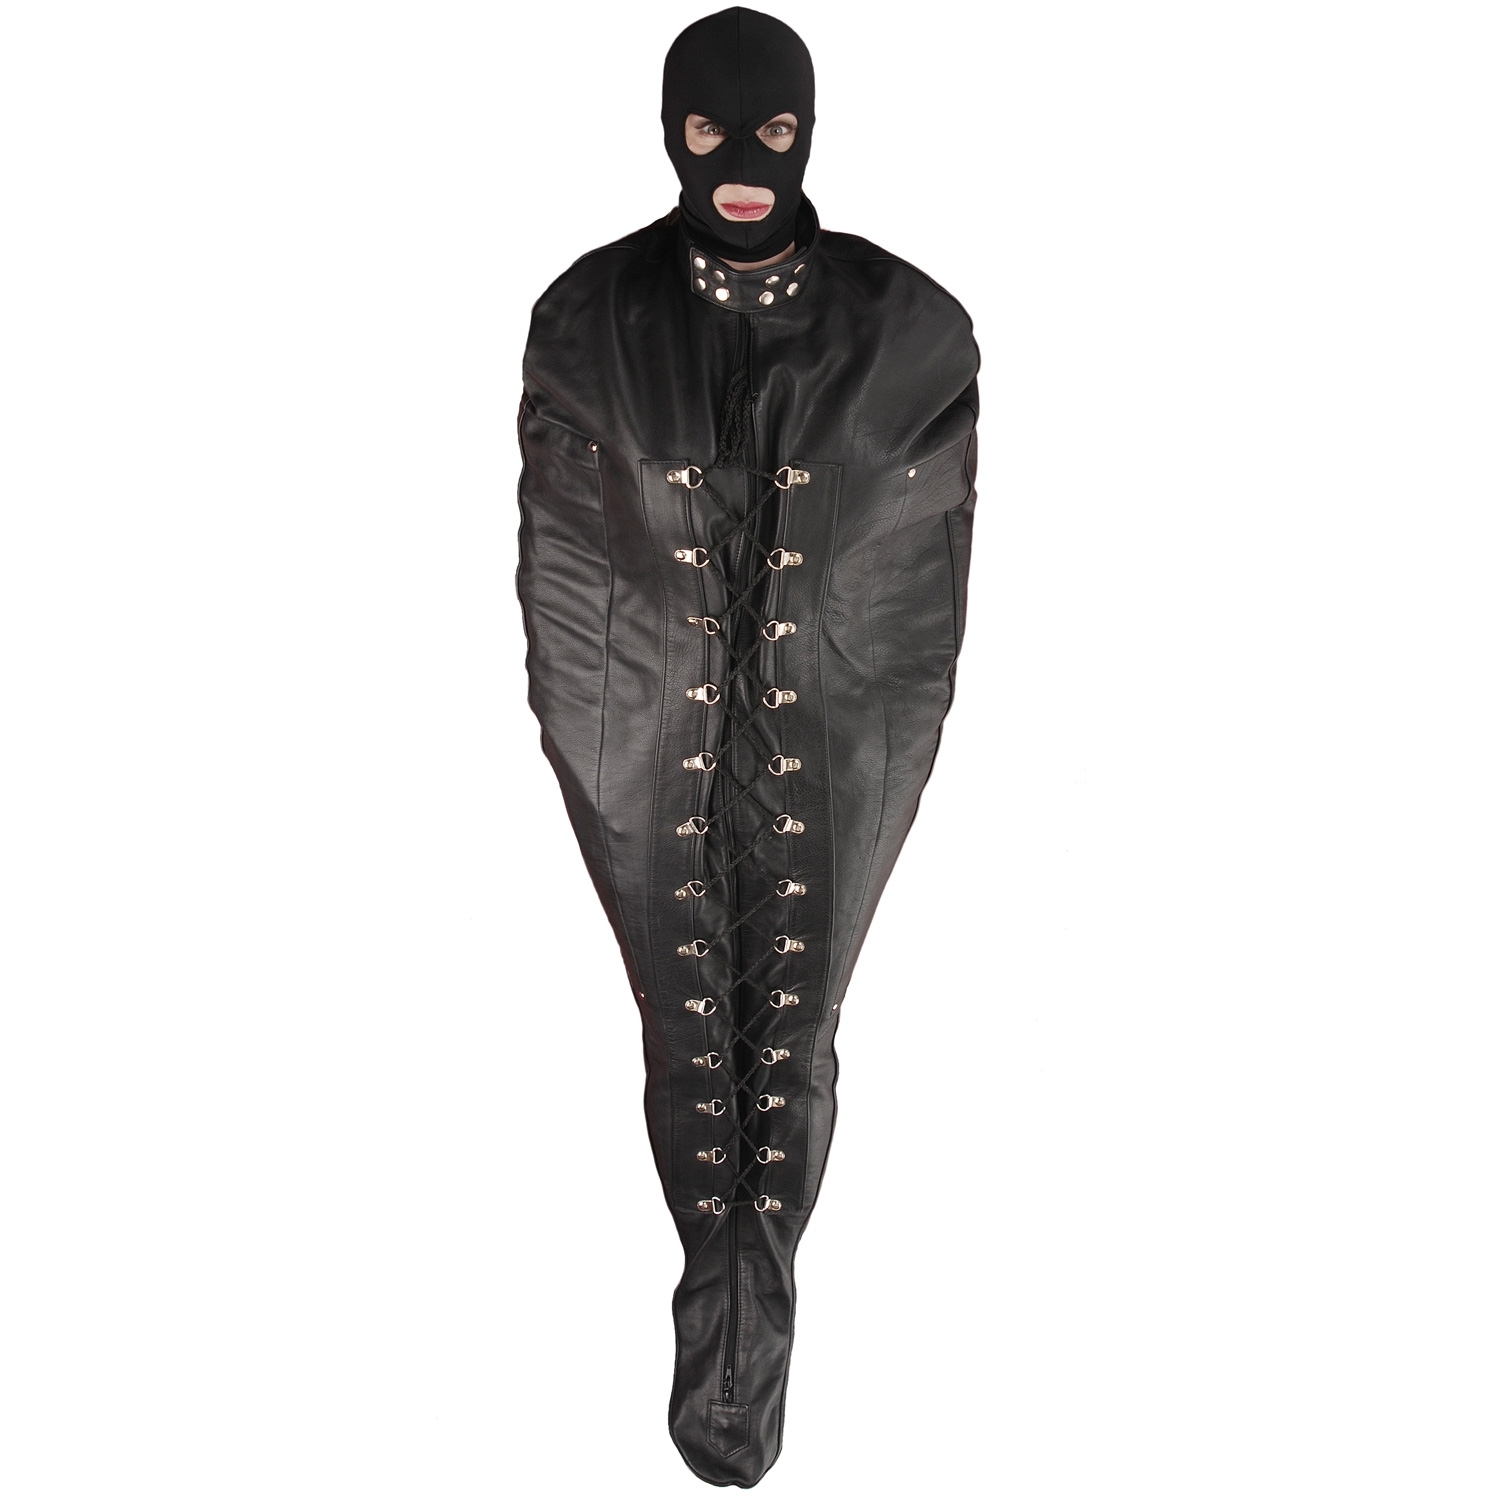 Strict Leather Sleep Sack        - Sort - XL